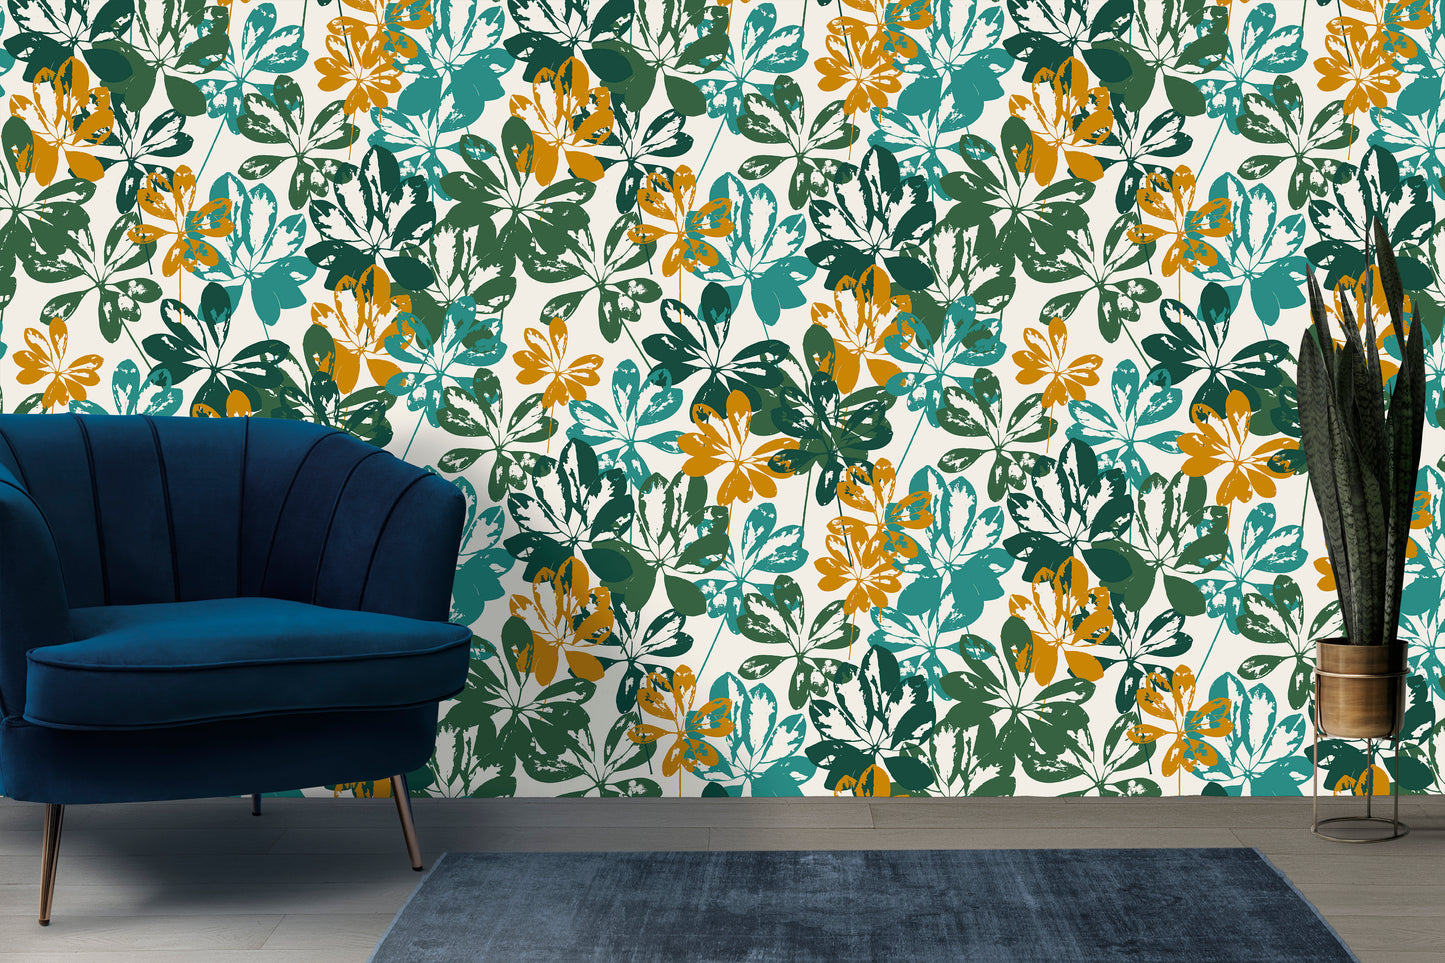 schefflera plant decorative seamless pattern repeating background tileable wallpaper print